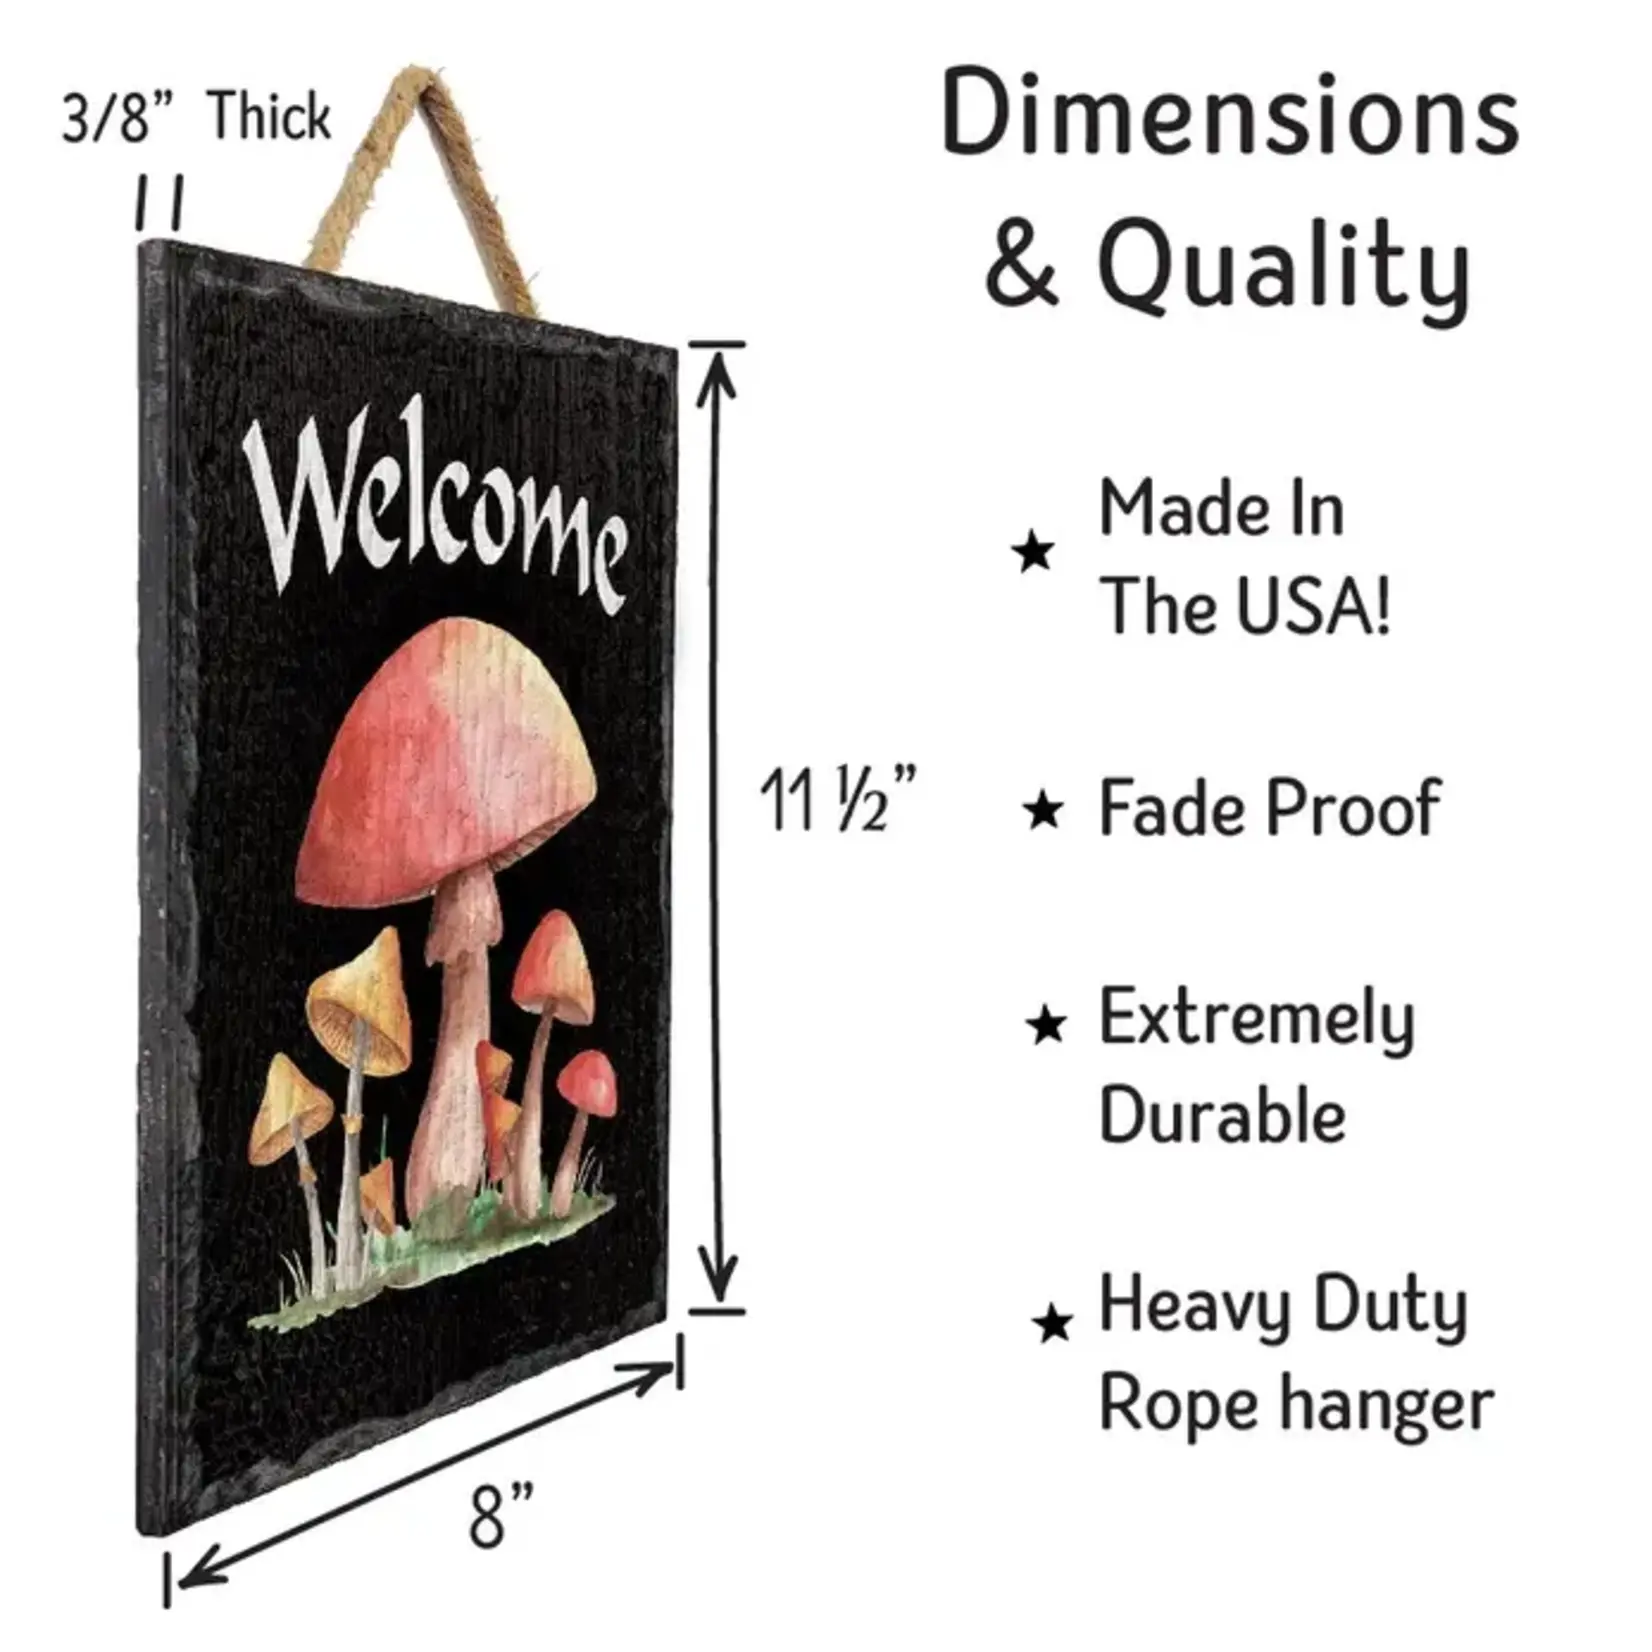 Mushrooms Welcome - Slate Impressions